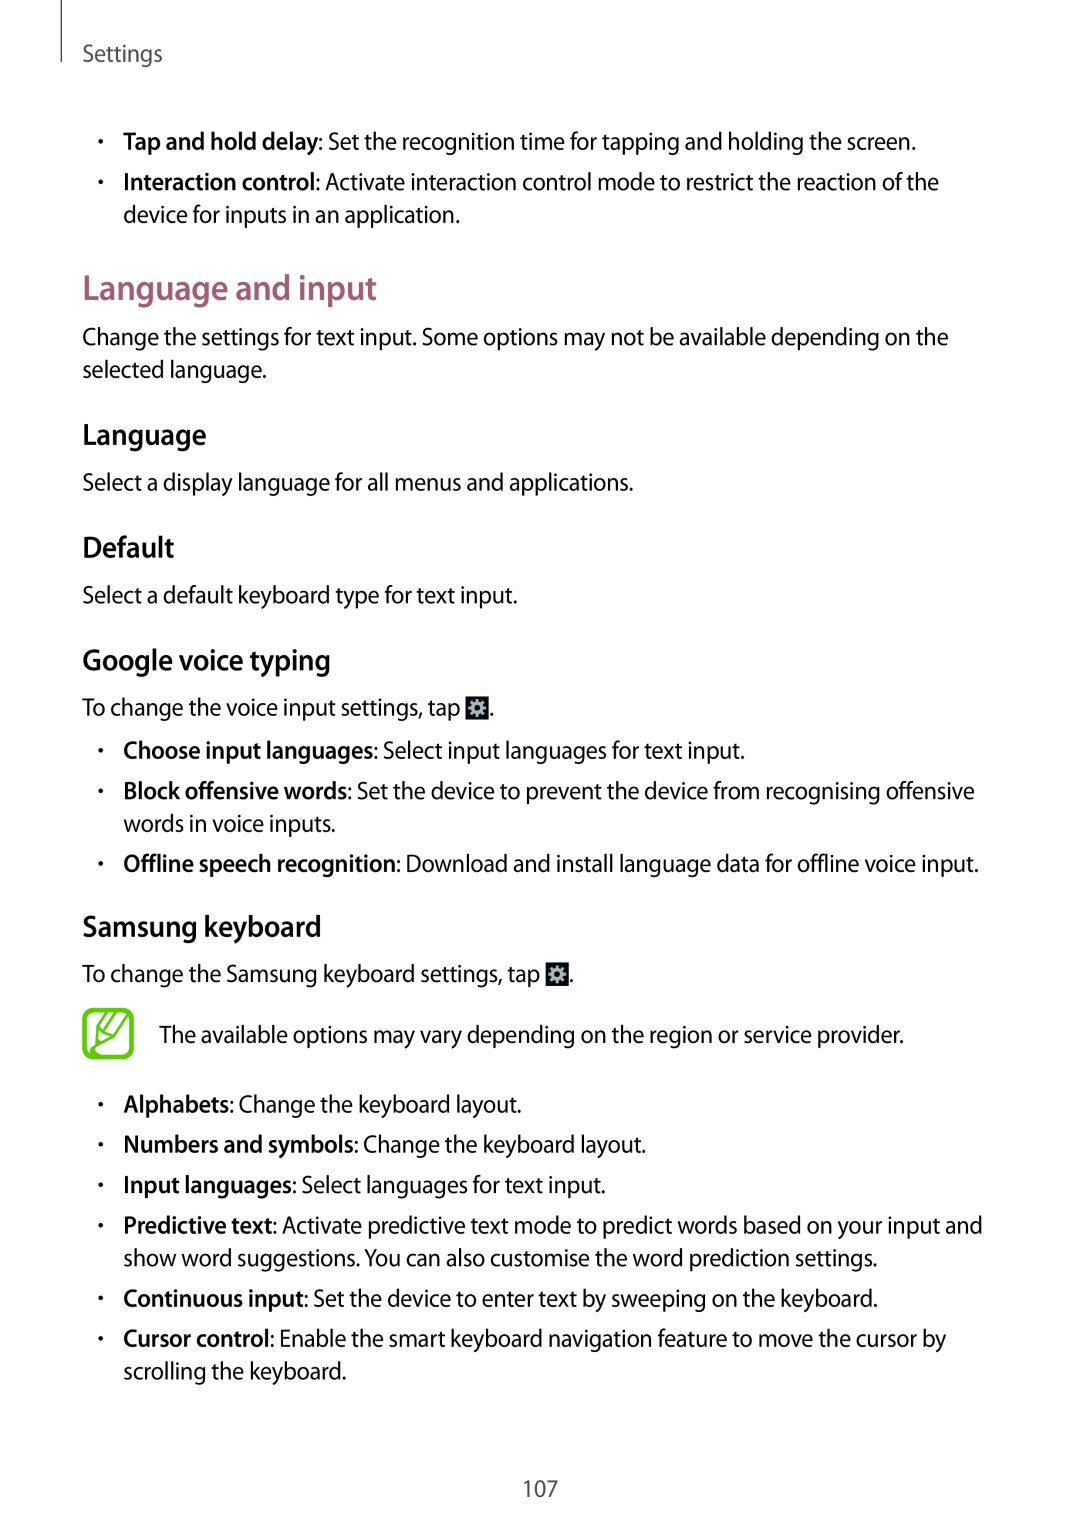 Samsung GT2I8200OKNORX, GT-I8200ZNNDBT manual Language and input, Default, Google voice typing, Samsung keyboard, Settings 